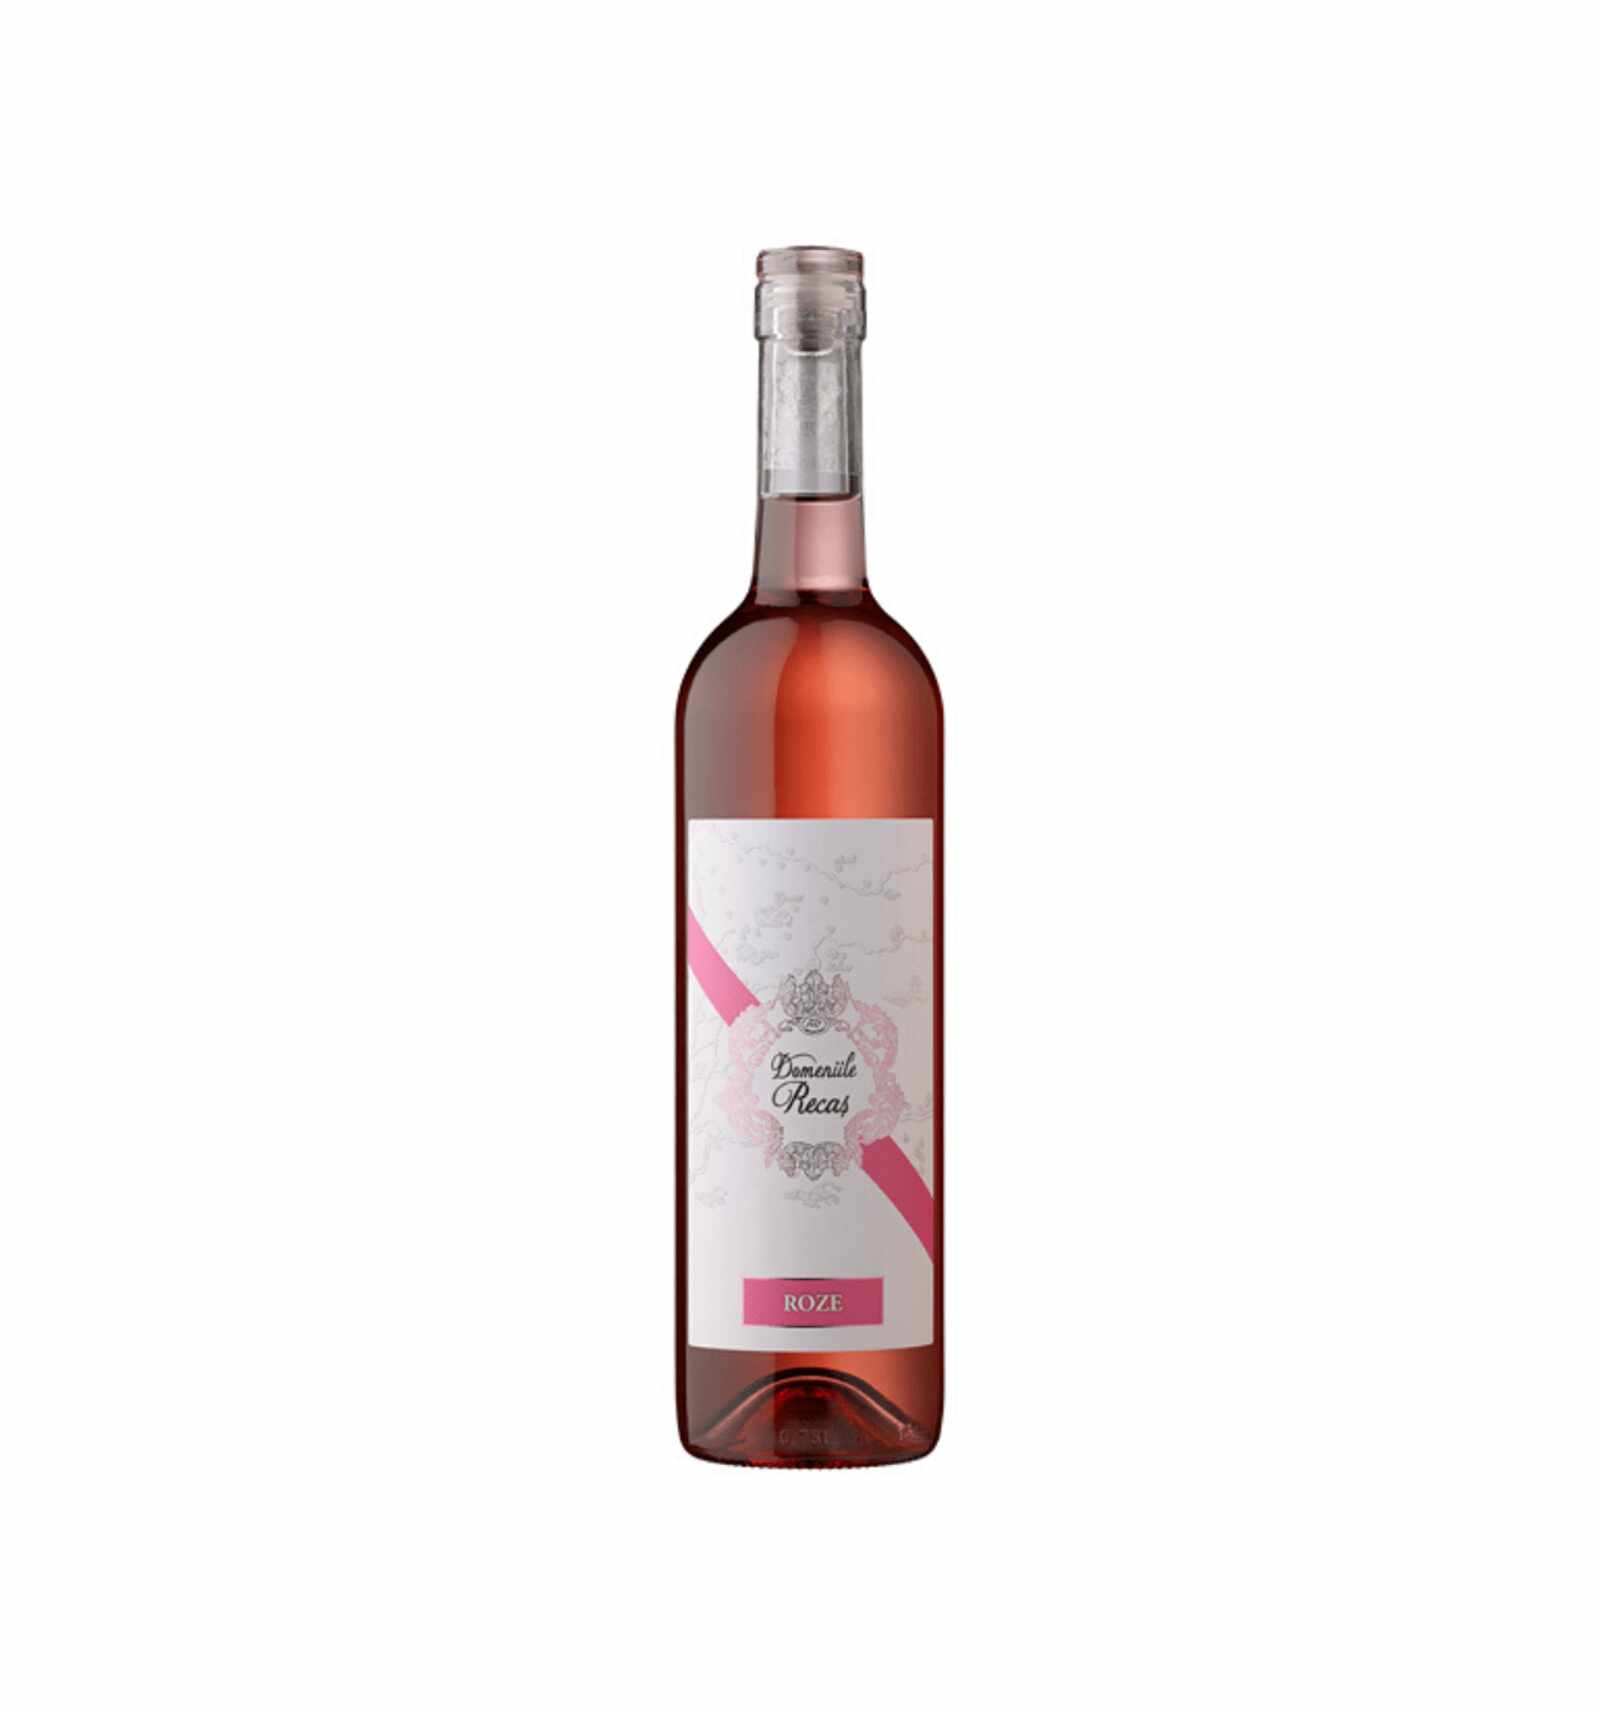 Vin roze demisec, Cupaj, Domeniile Recas, 12.5% alc., 0.75L, Romania